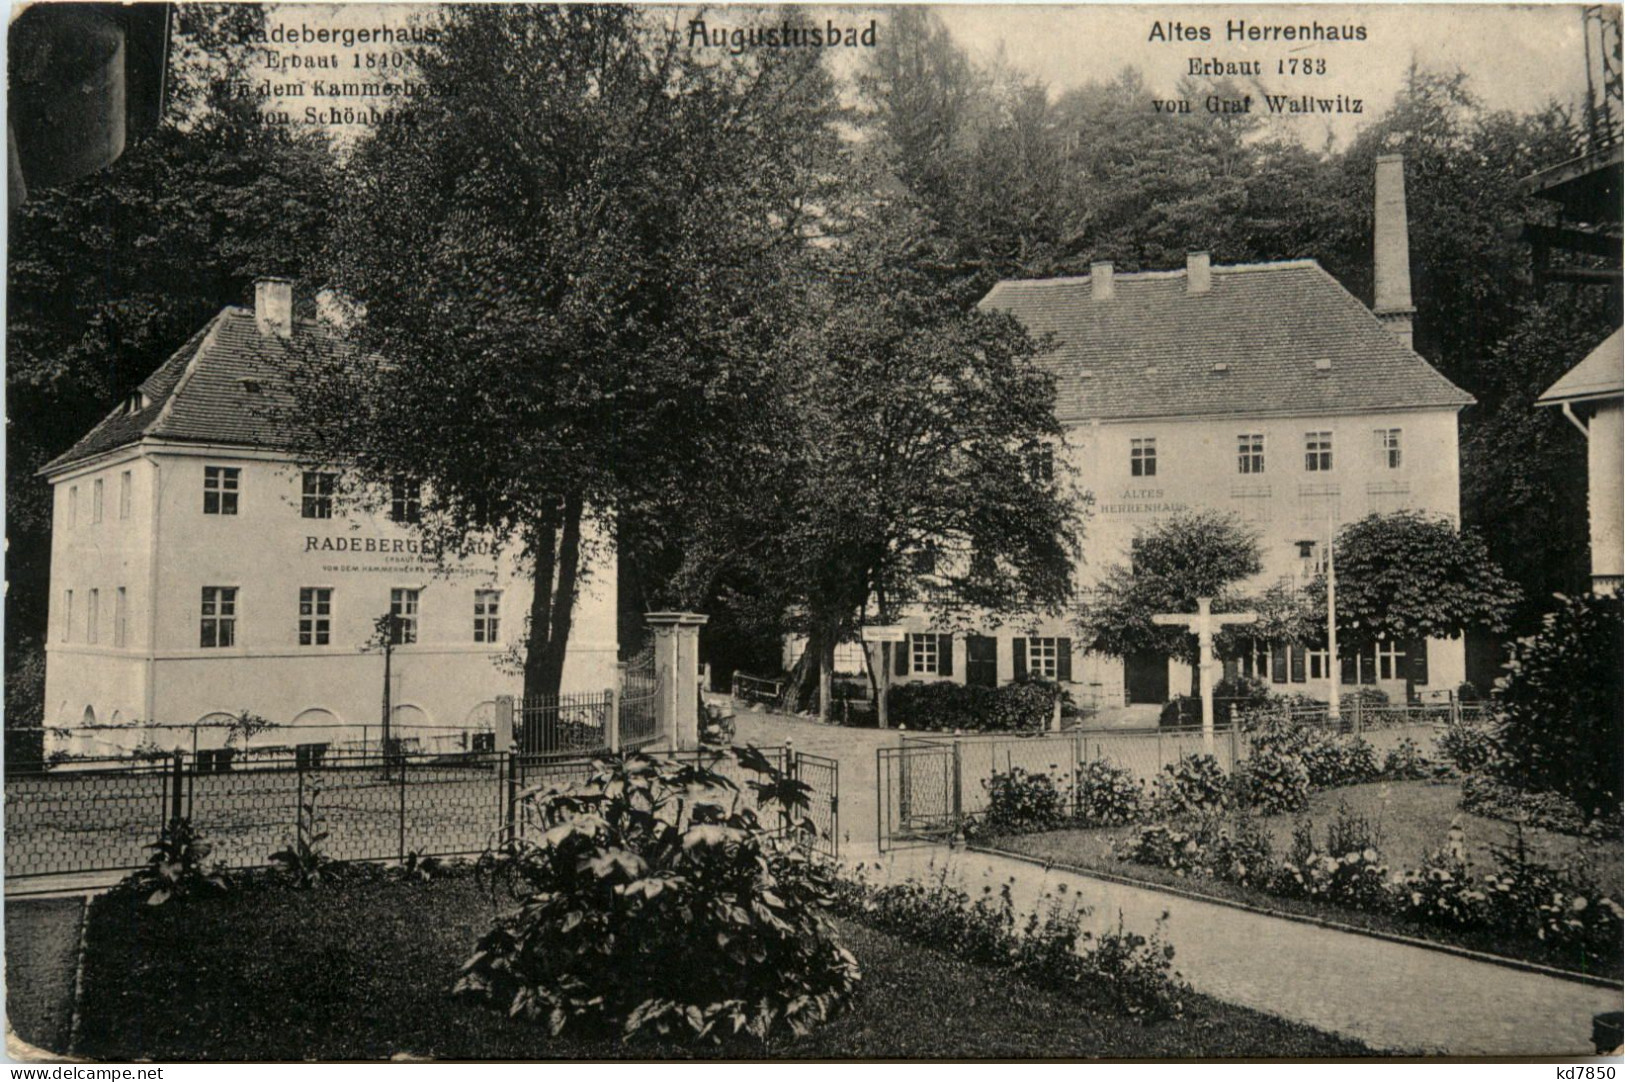 Augustusbad, Radebergerhaus - Bautzen